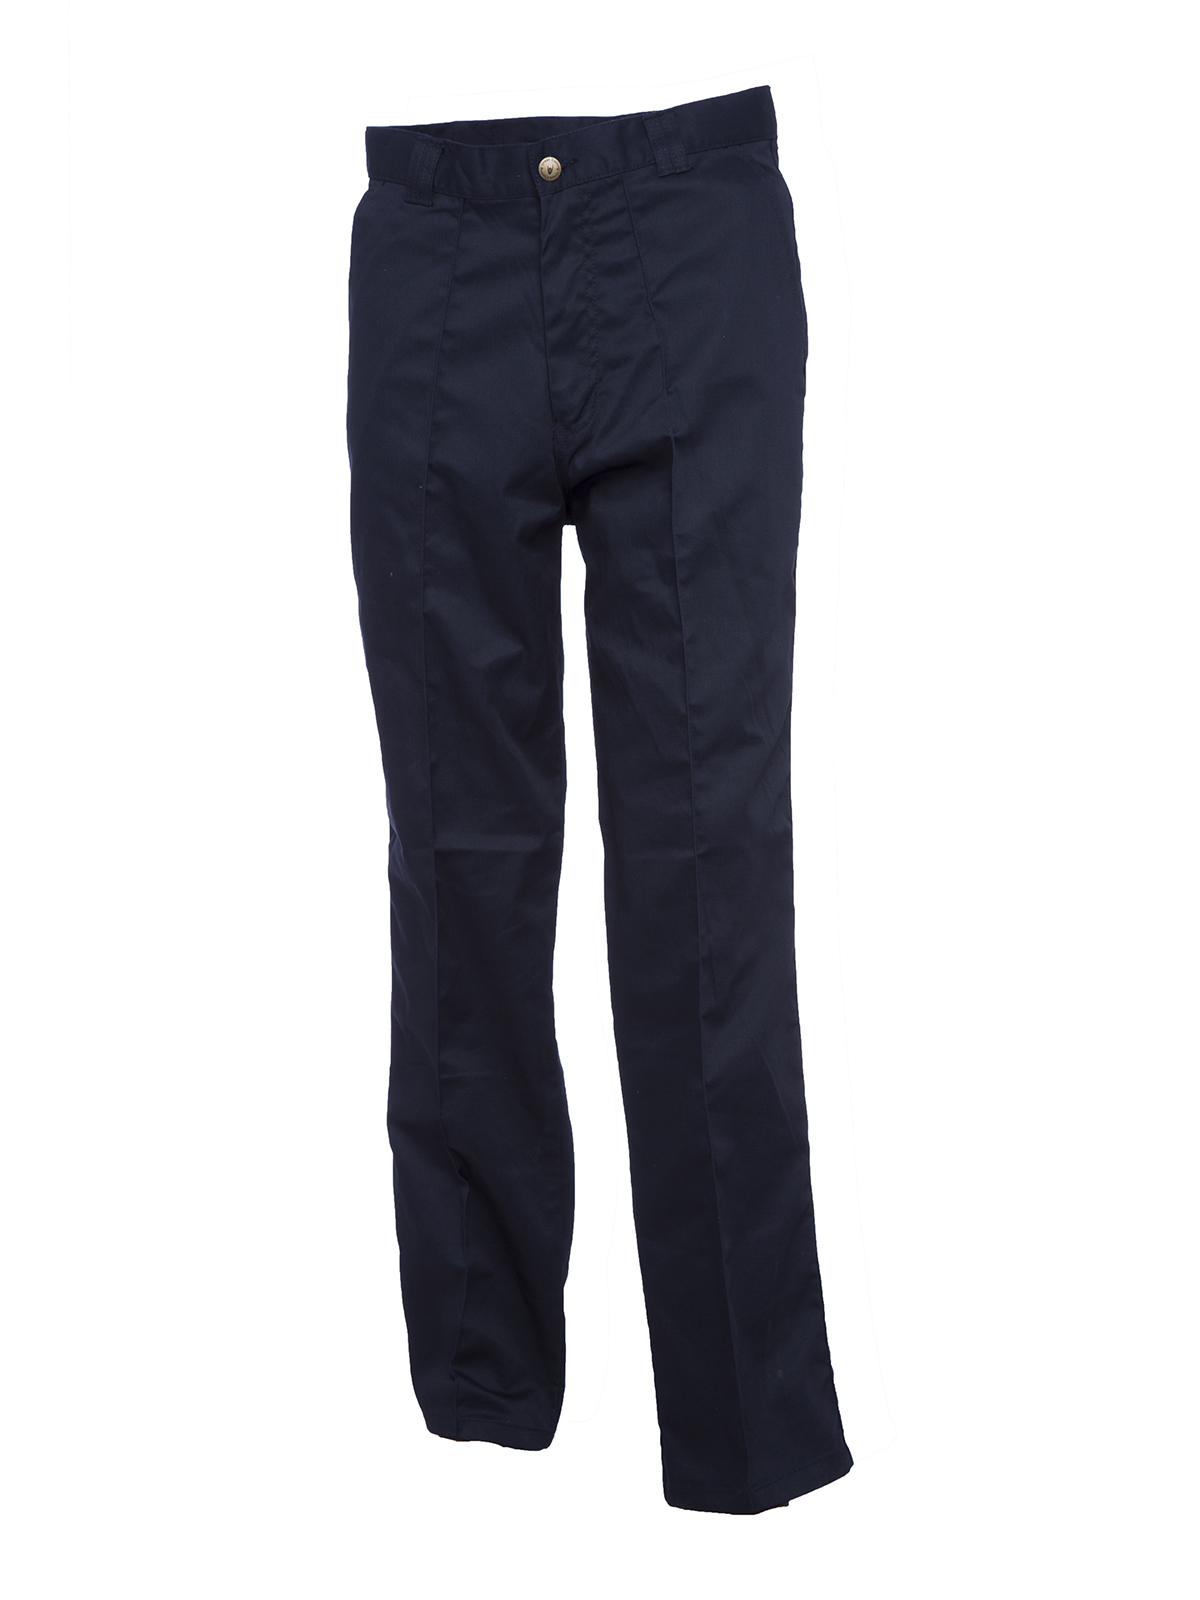 Workwear Trousers, Navy Blue - 42L